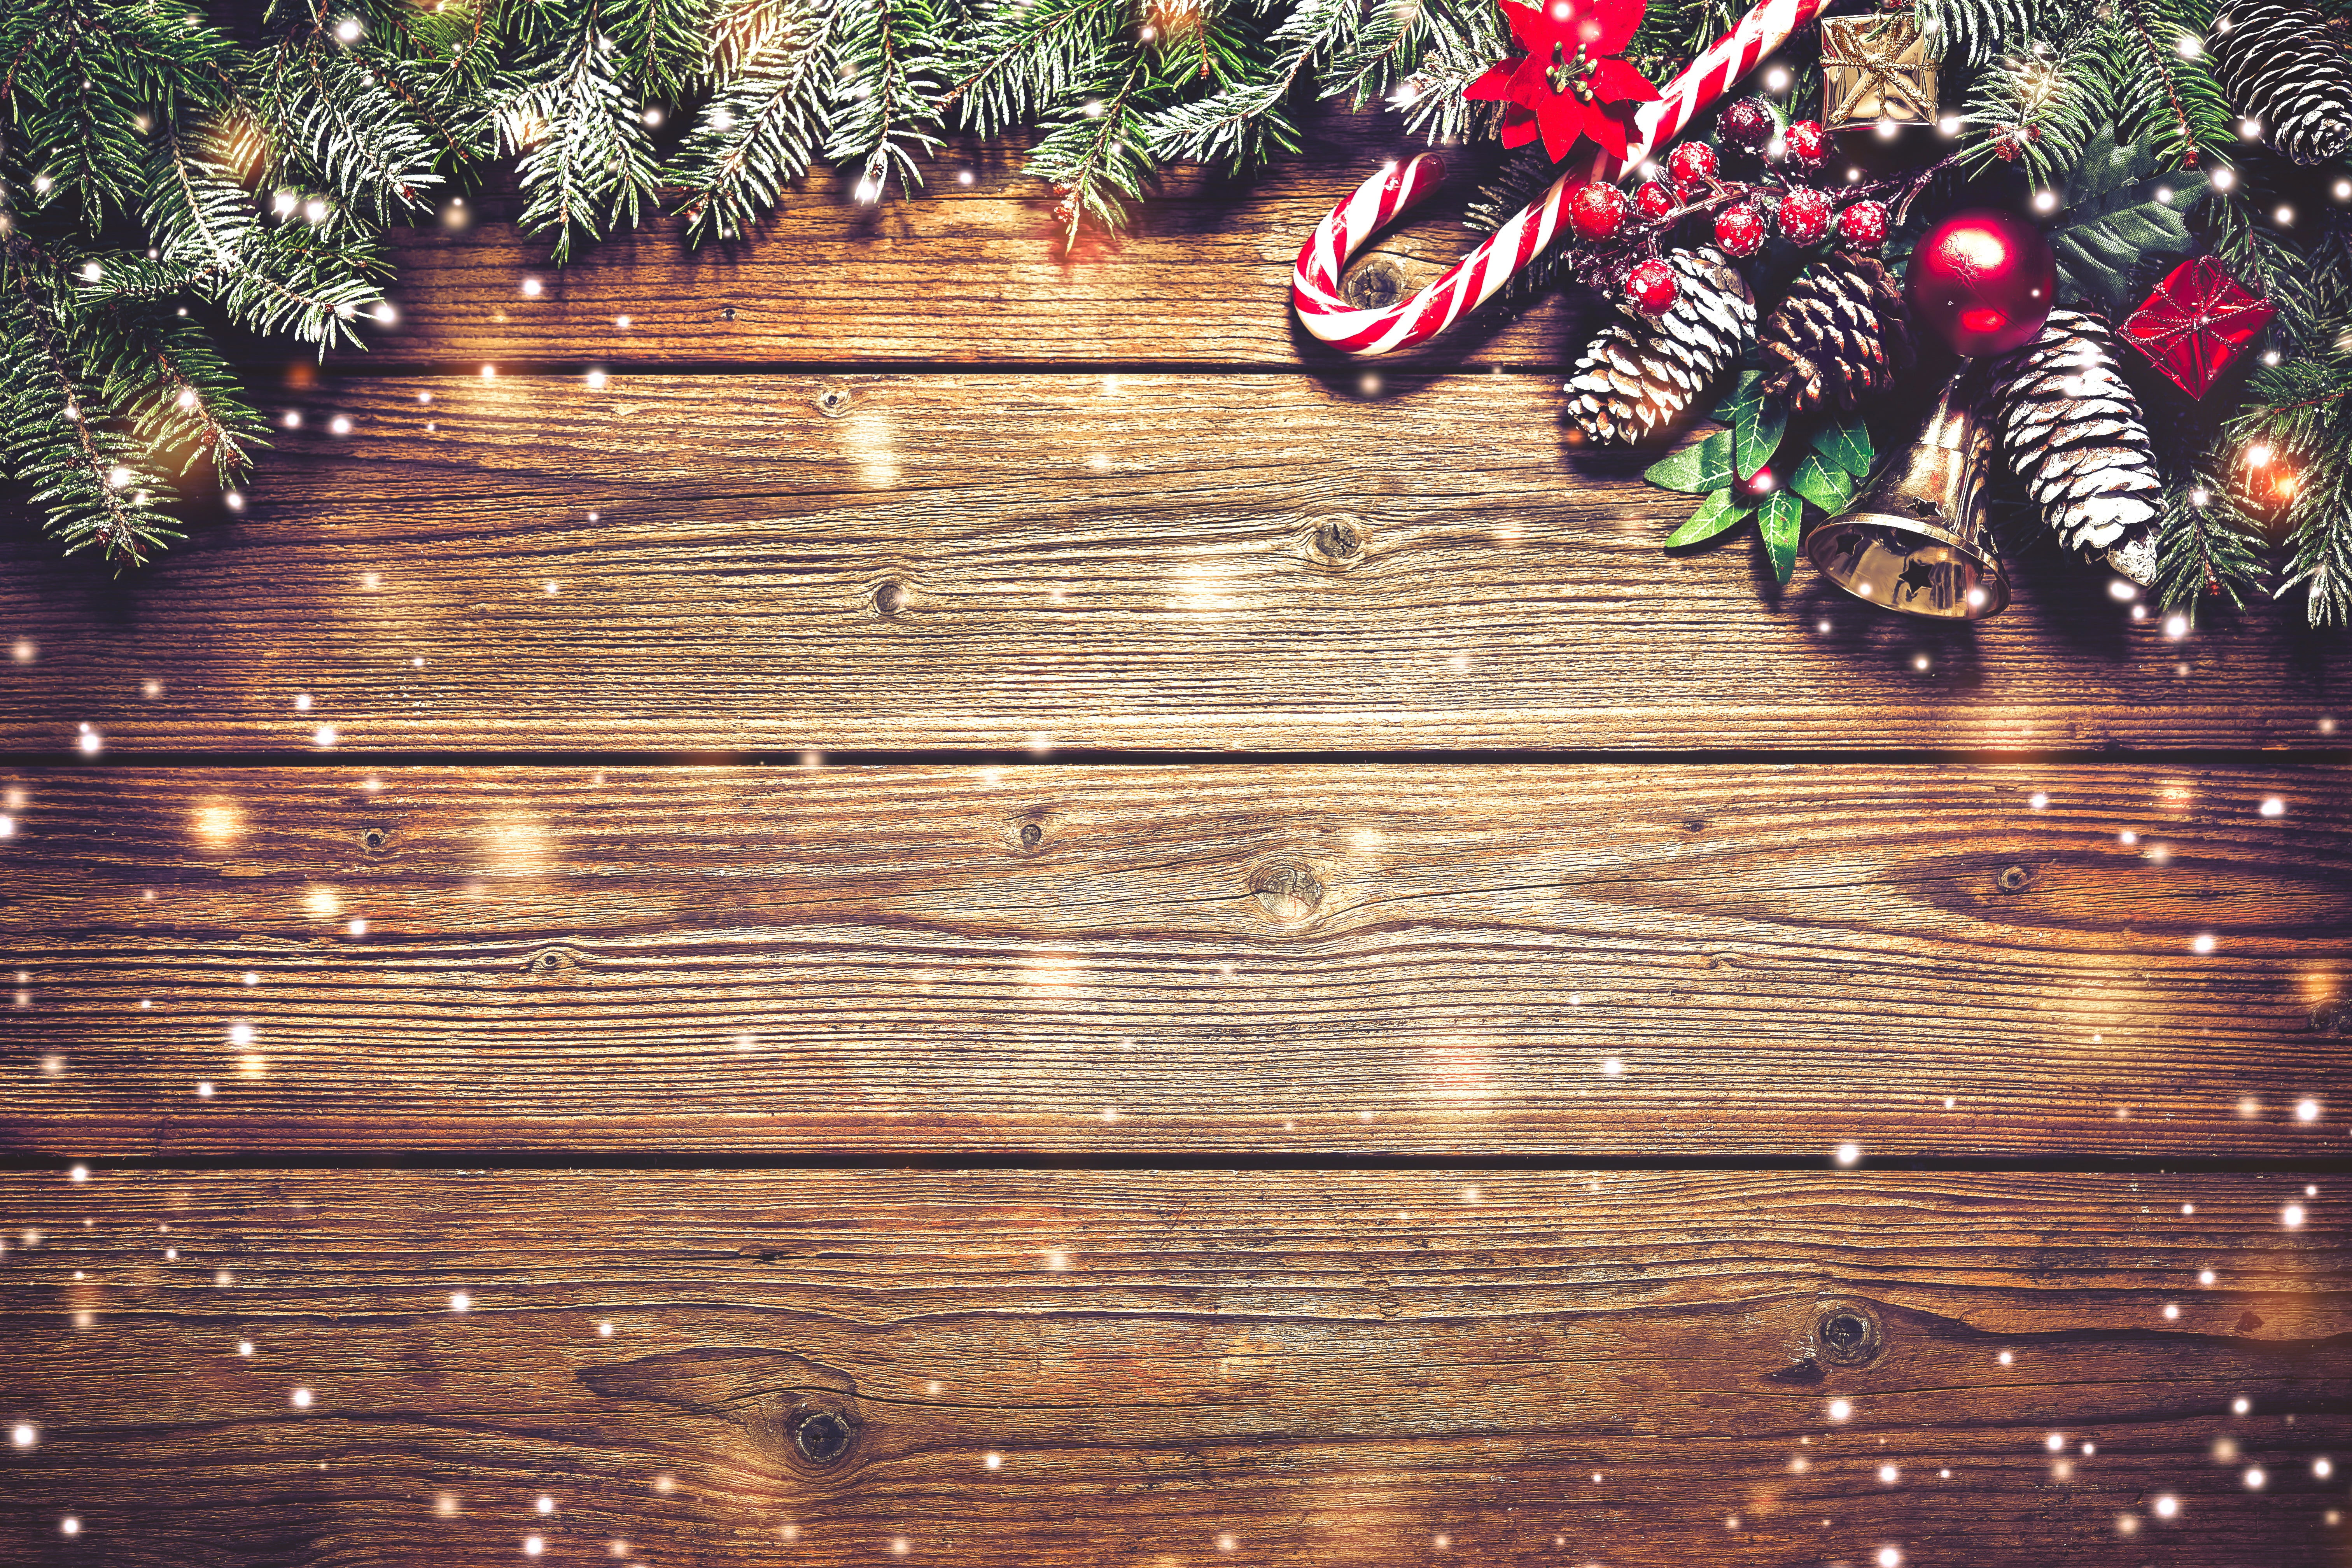 Rustic Wooden Reindeer, winter, balls, celebration, ornate